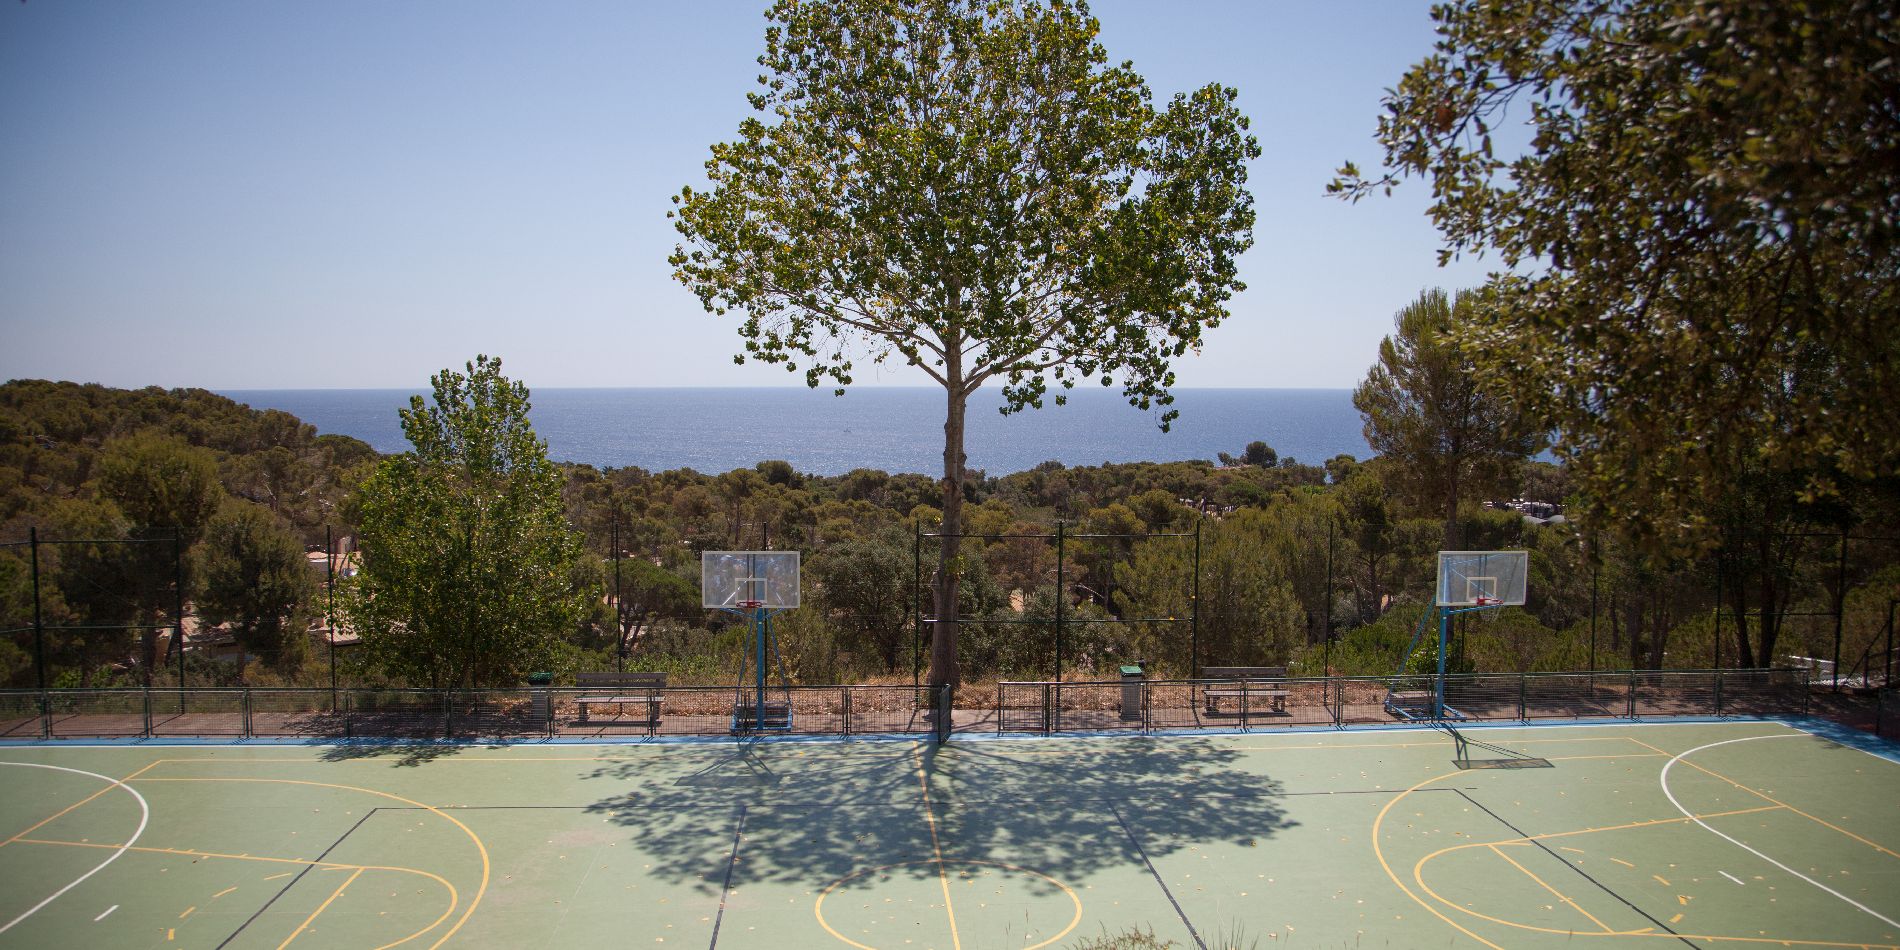 Camping Cala Gogo activities Camping with basketball court